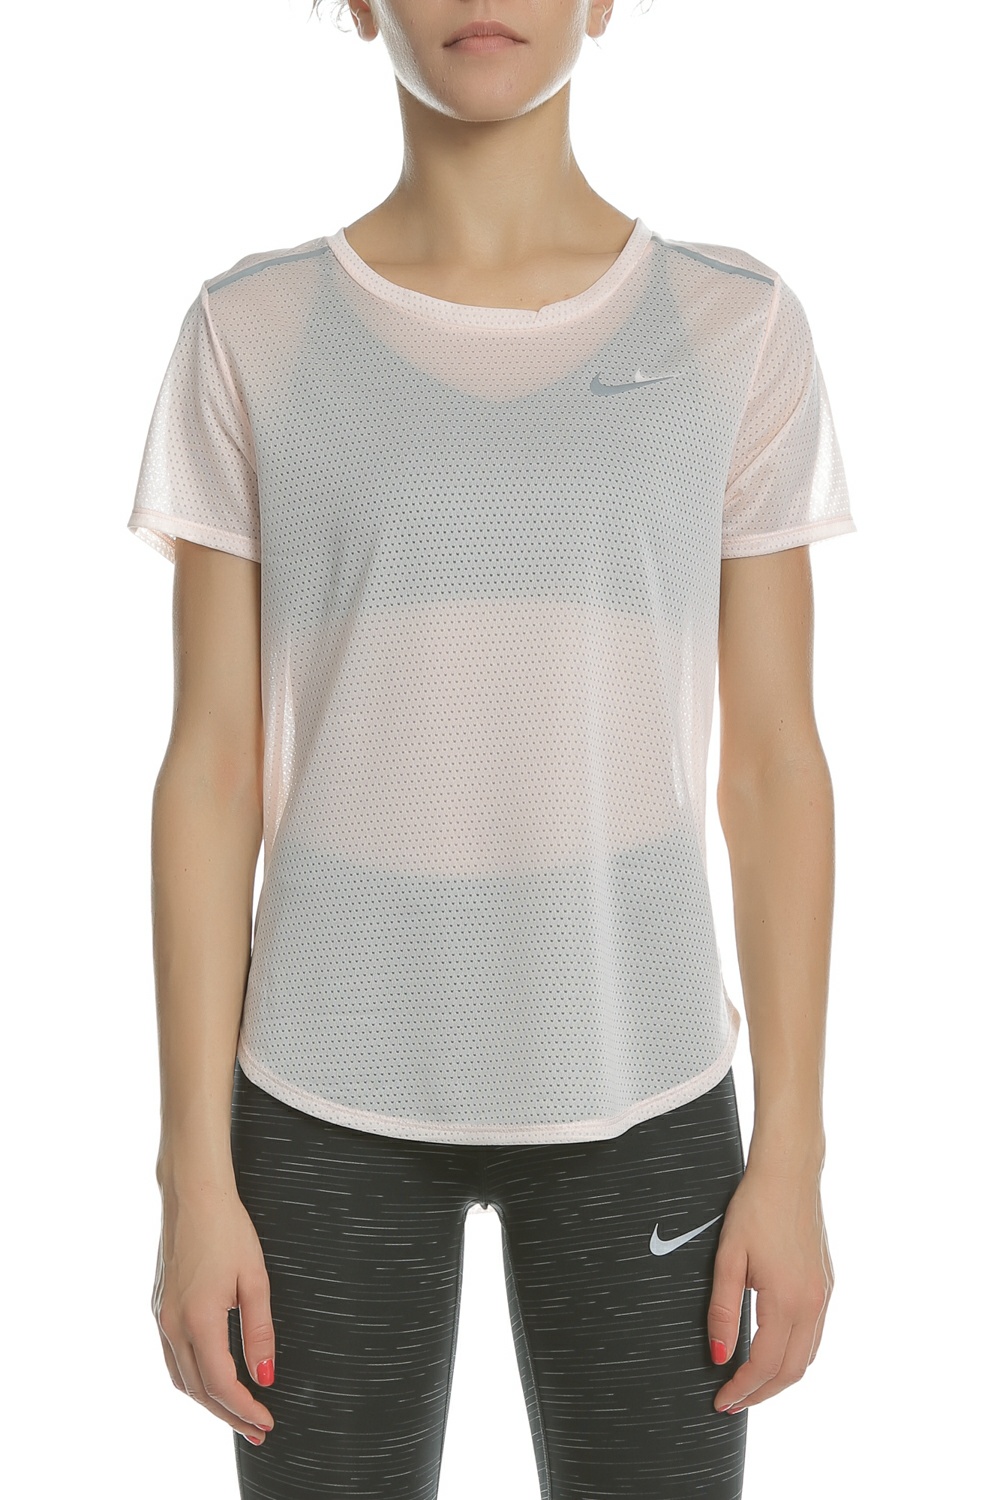 NIKE - Κοντομάνικη μπλούζα NIKE ροζ Γυναικεία/Ρούχα/Αθλητικά/T-shirt-Τοπ